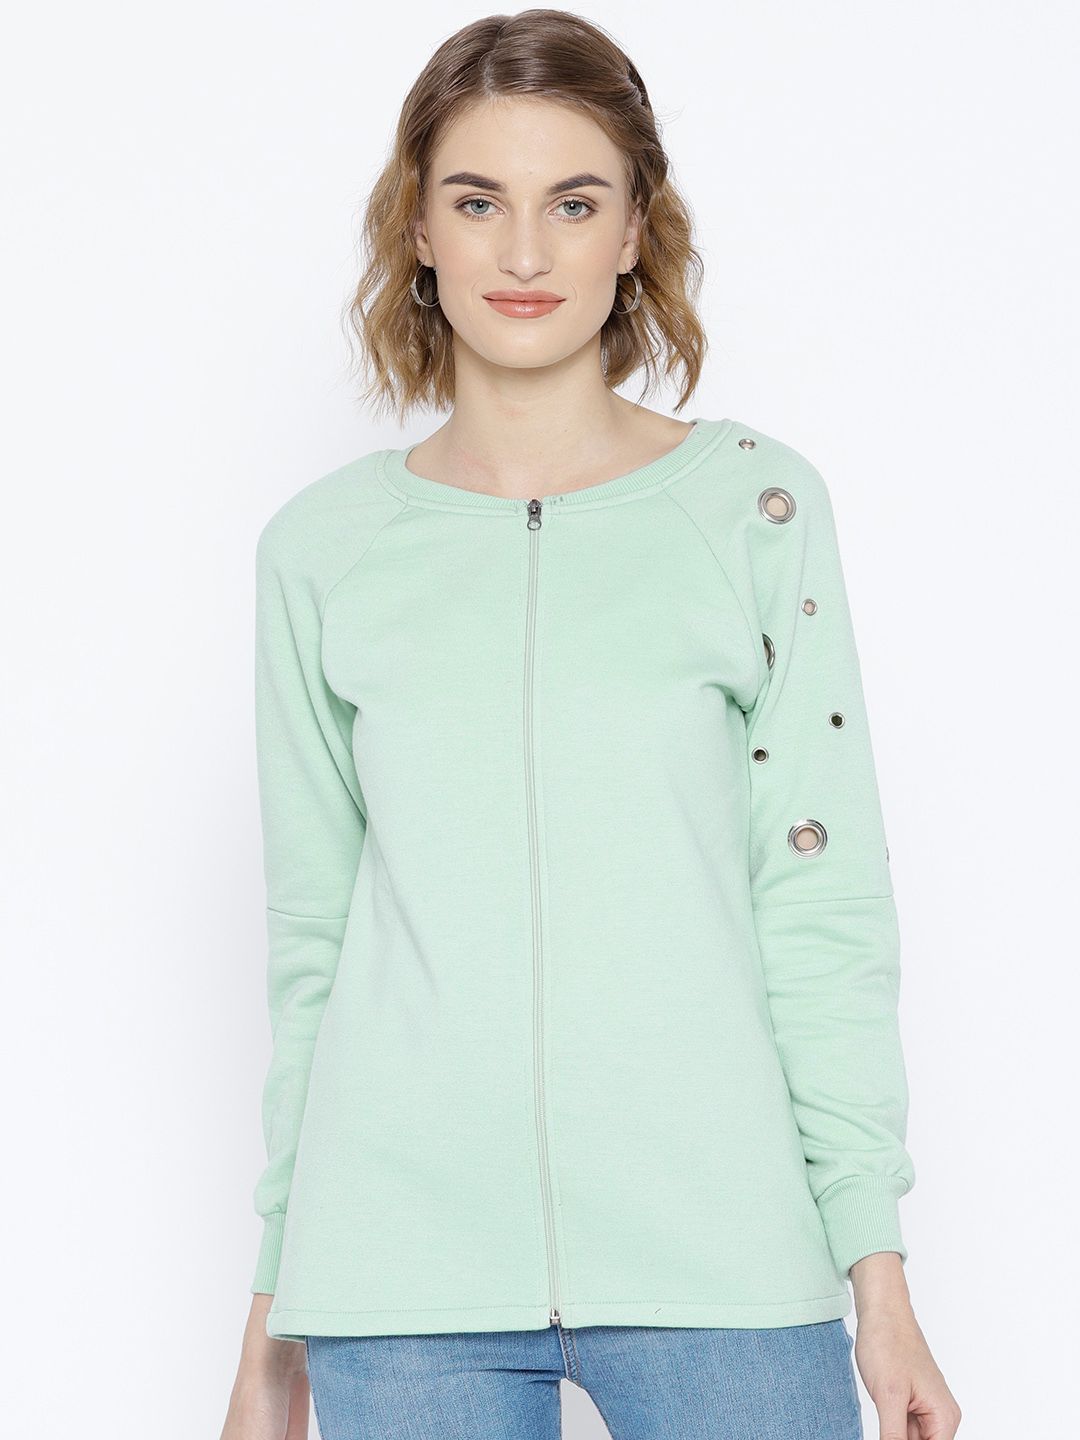 Belle Fille Women Sea Green Solid Sweatshirt Price in India